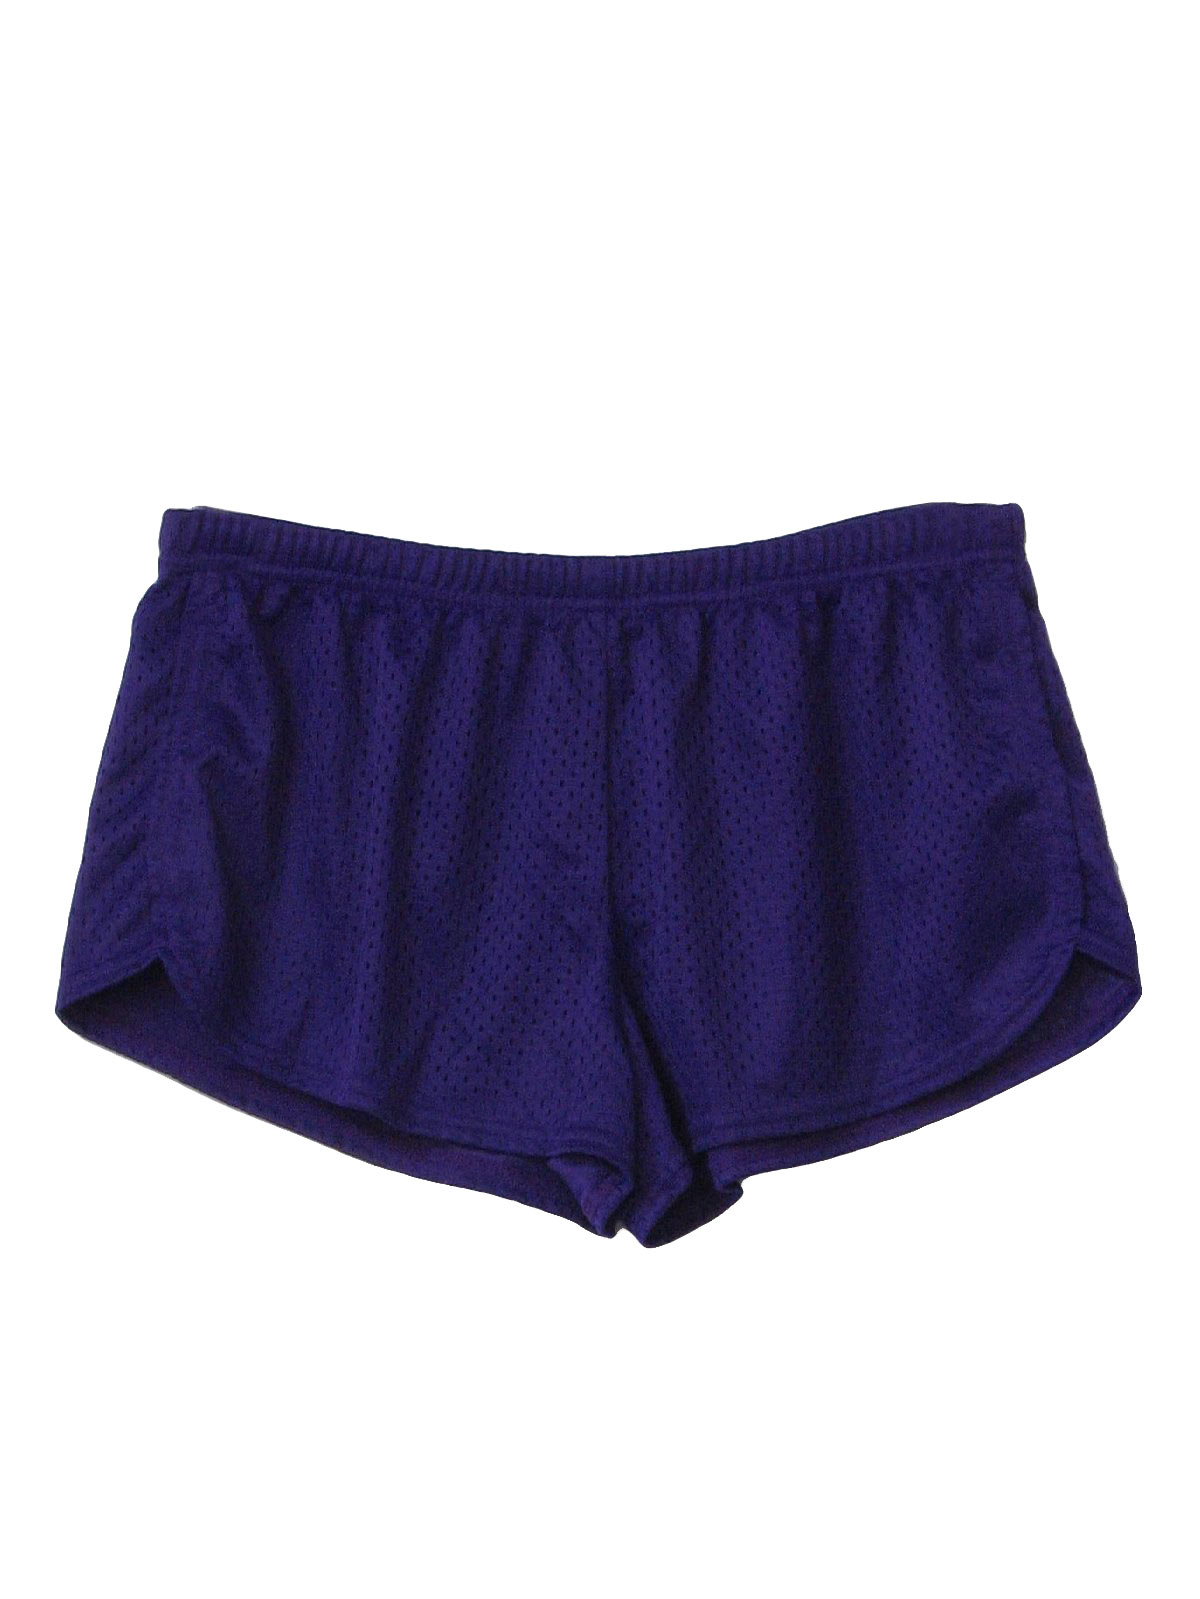 Retro 1990's Shorts (Soffe) : 90s -Soffe- Mens purple jersey knit nylon ...